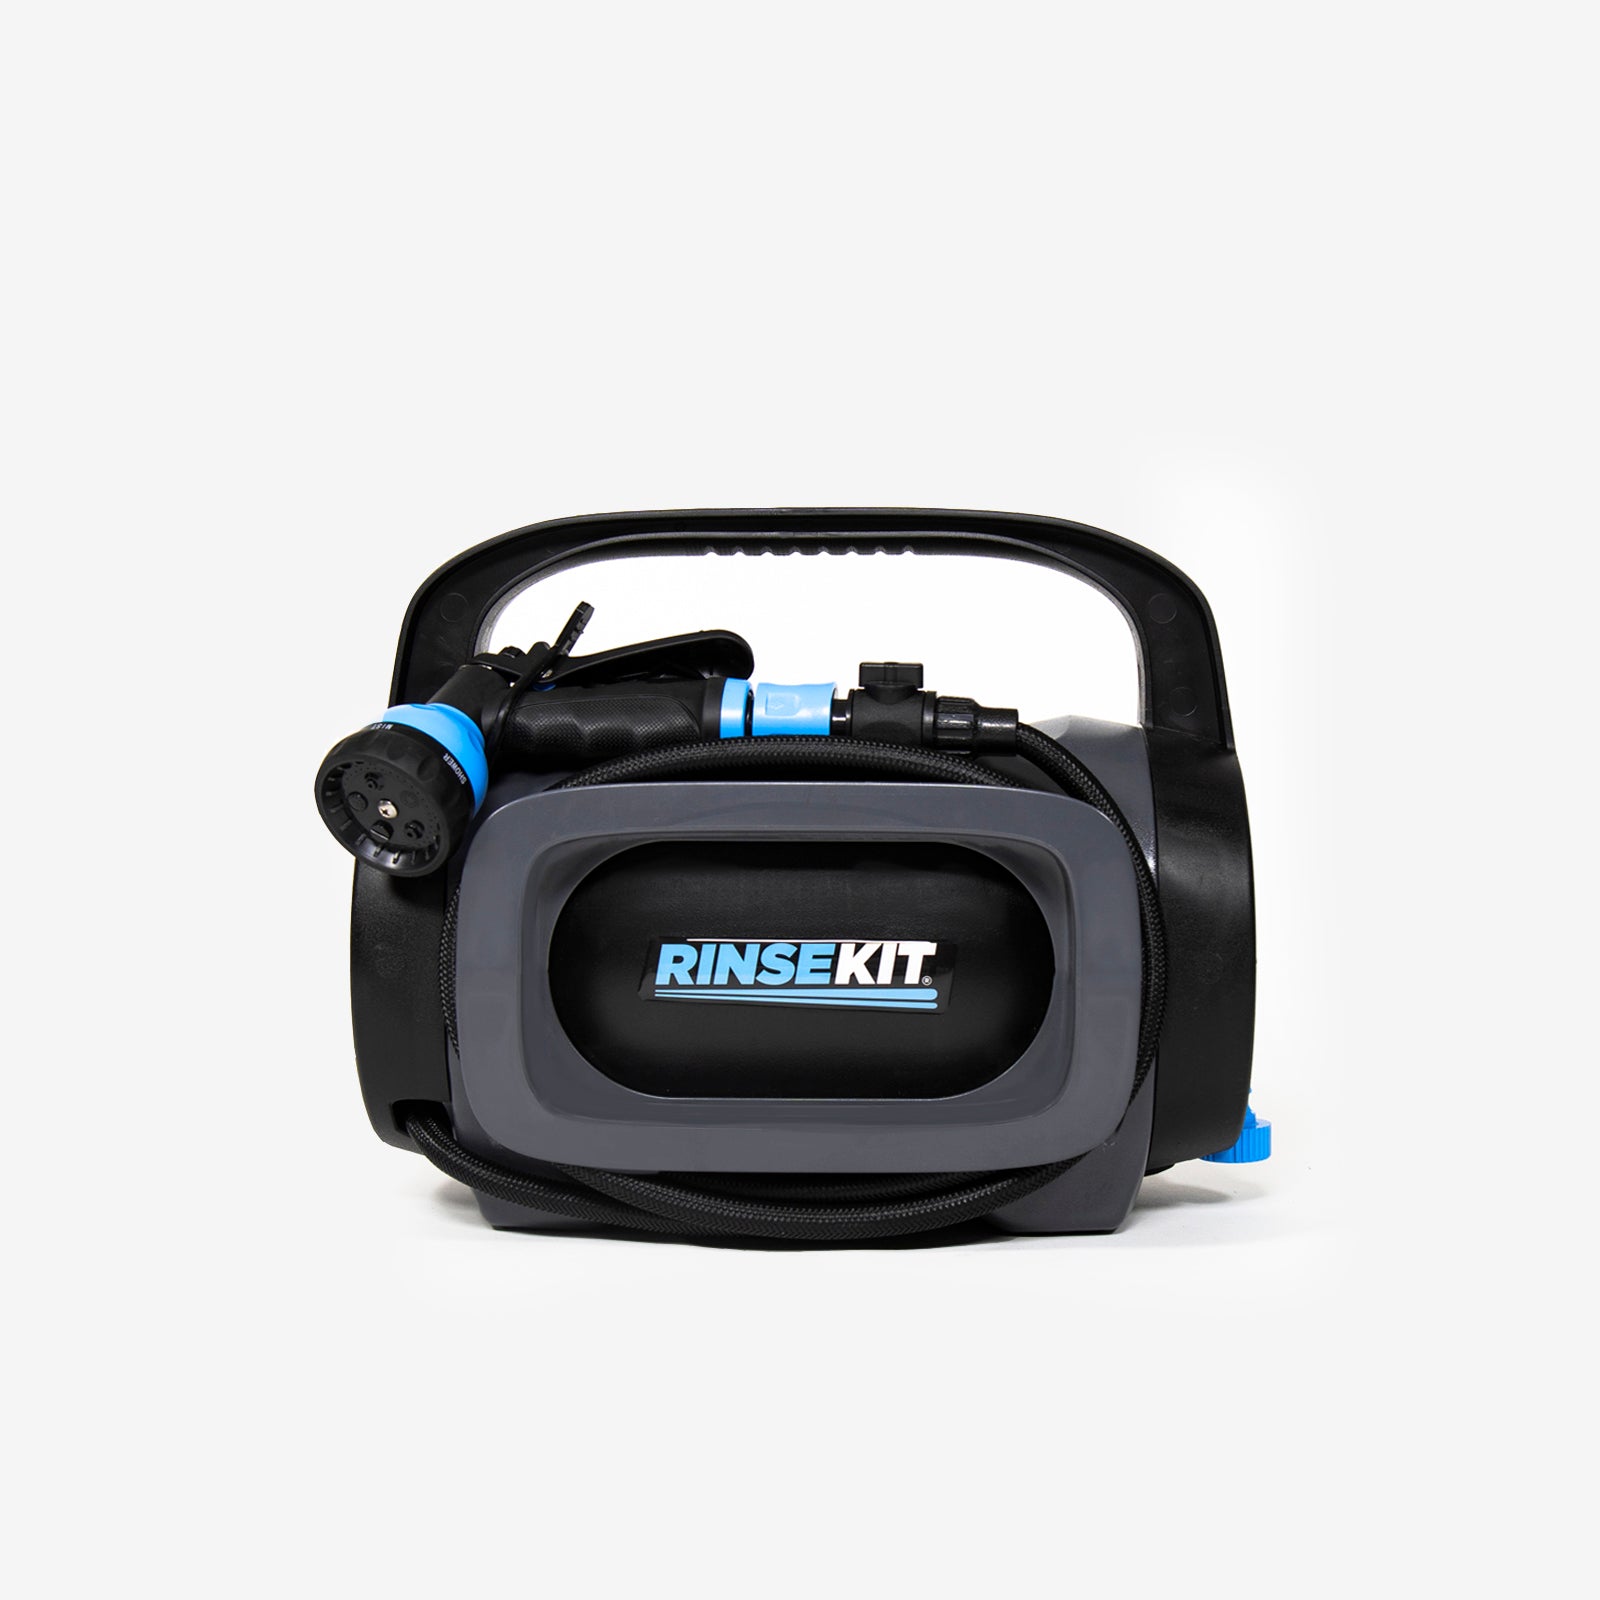 Rinse Kit RinseKit Portable Sprayer